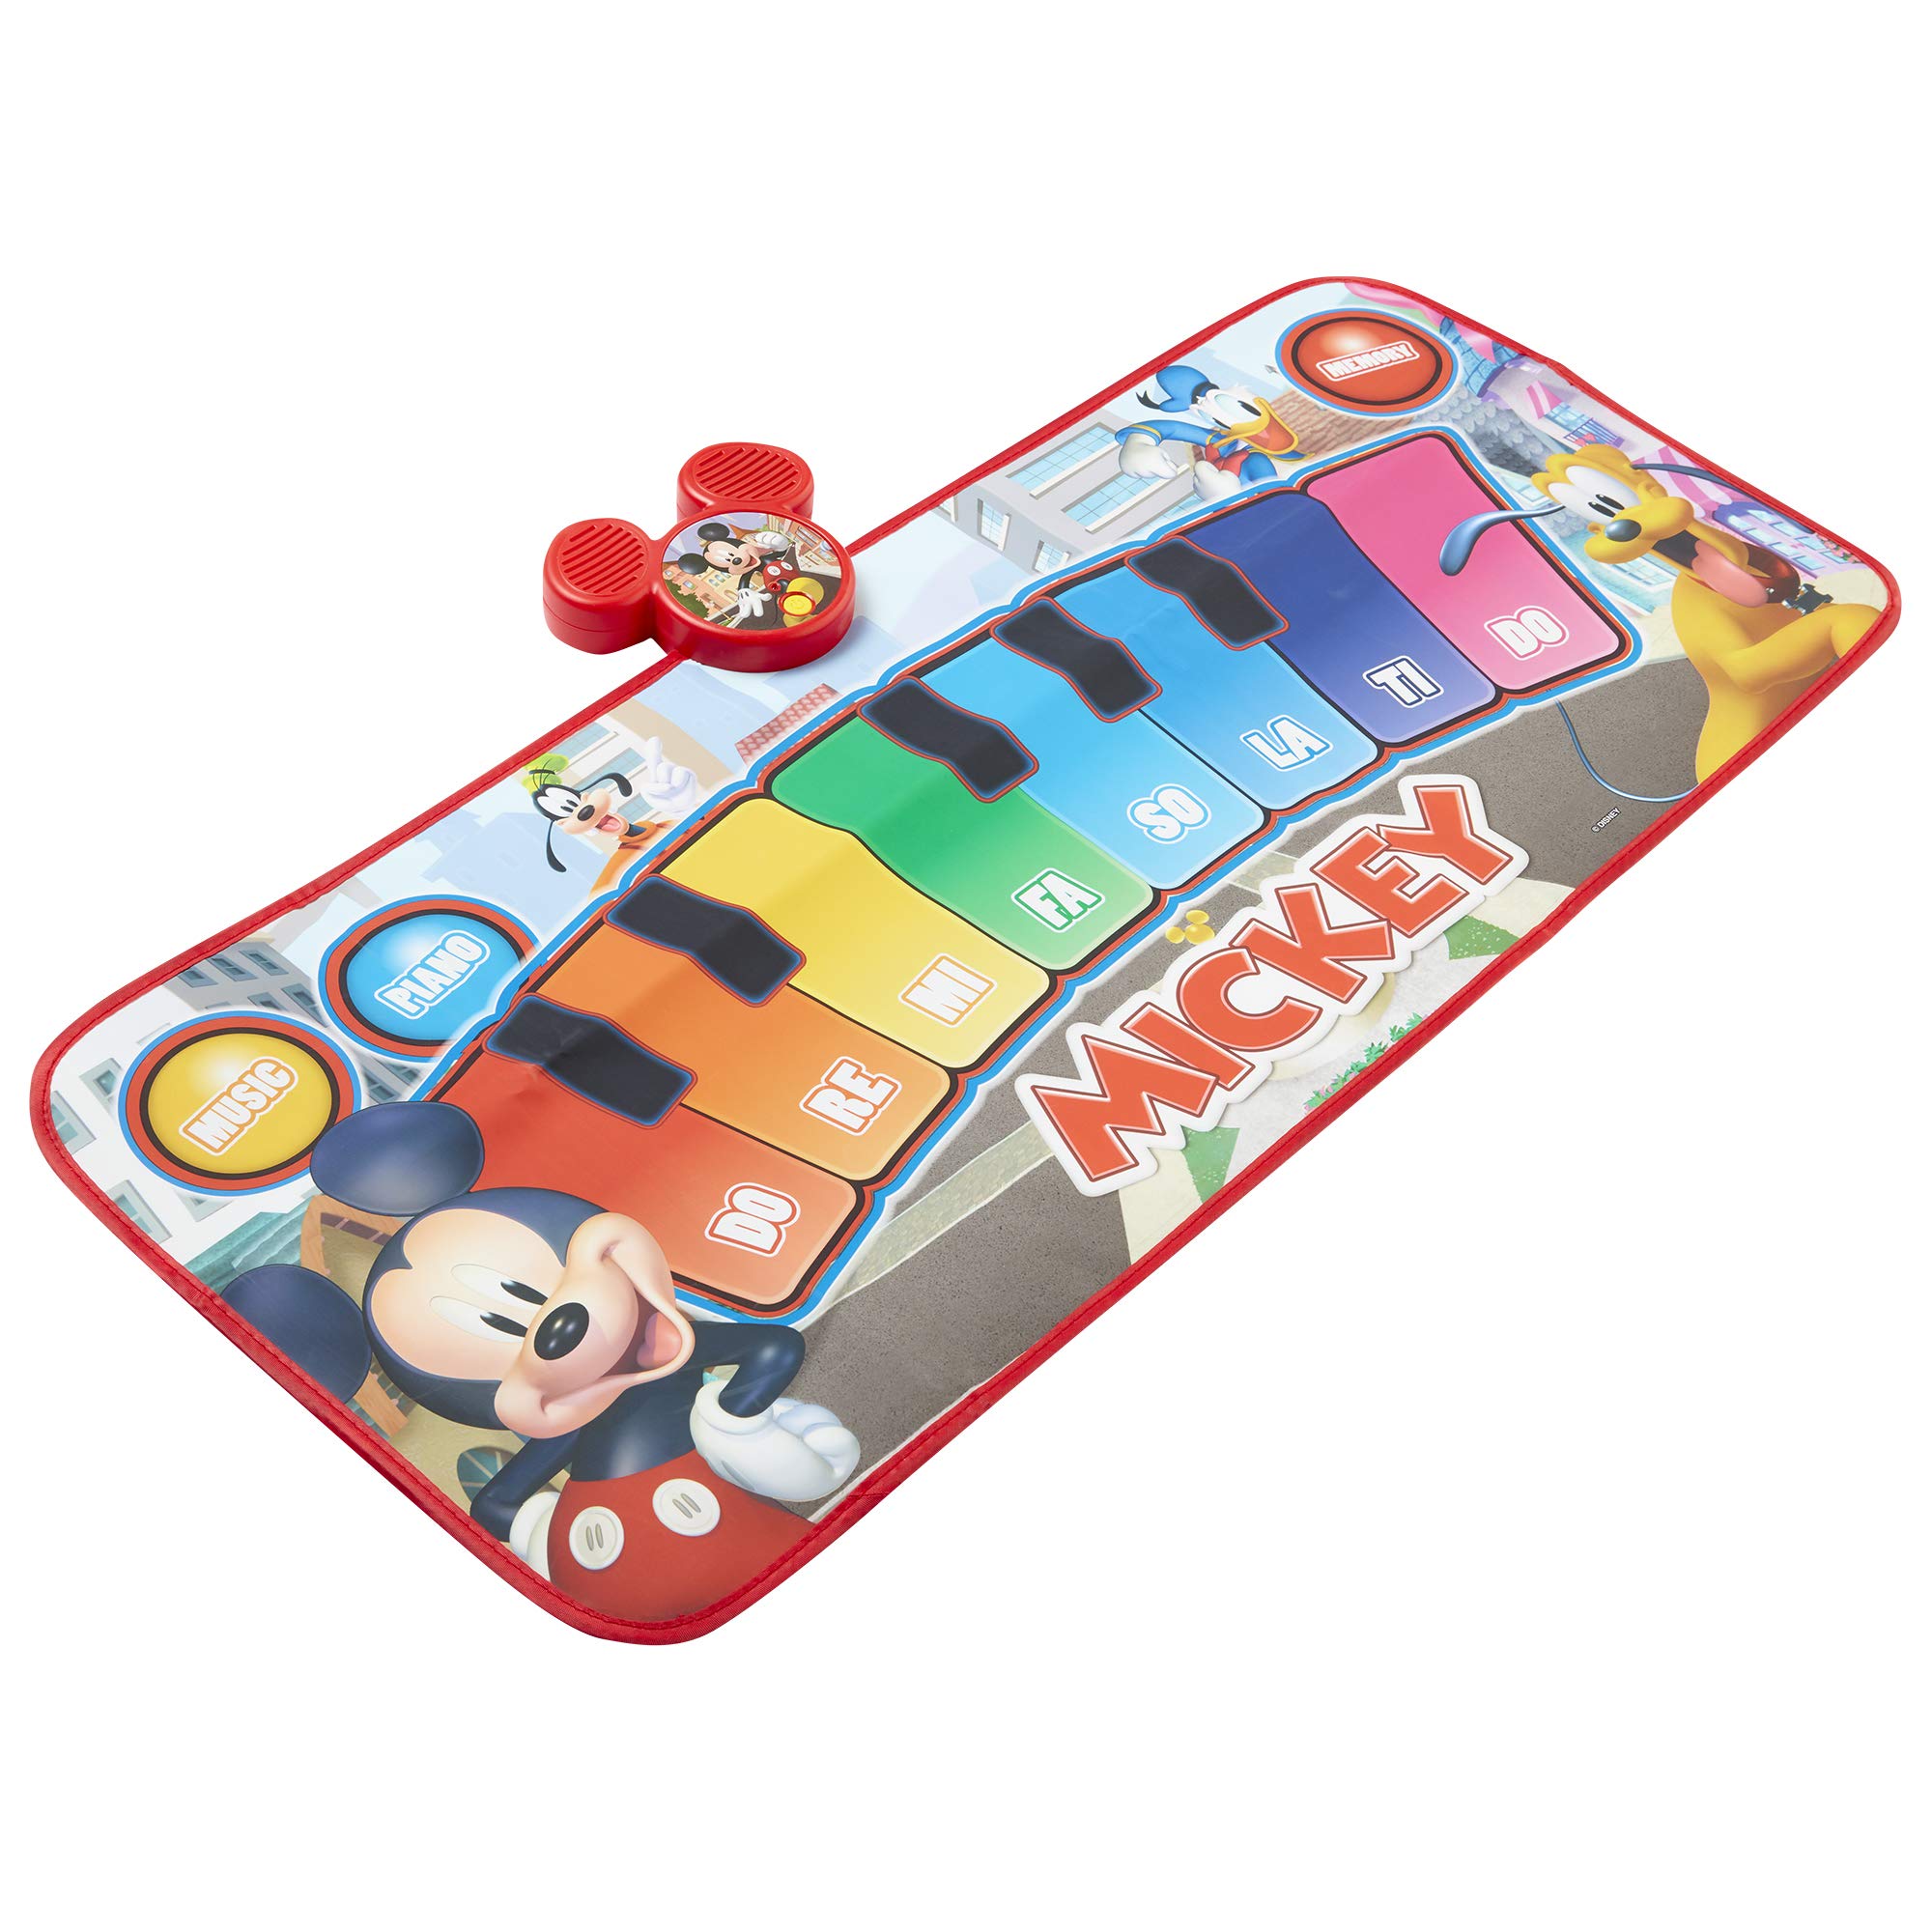 Mickey Mouse Music Mat Electronic Piano Dance Mat